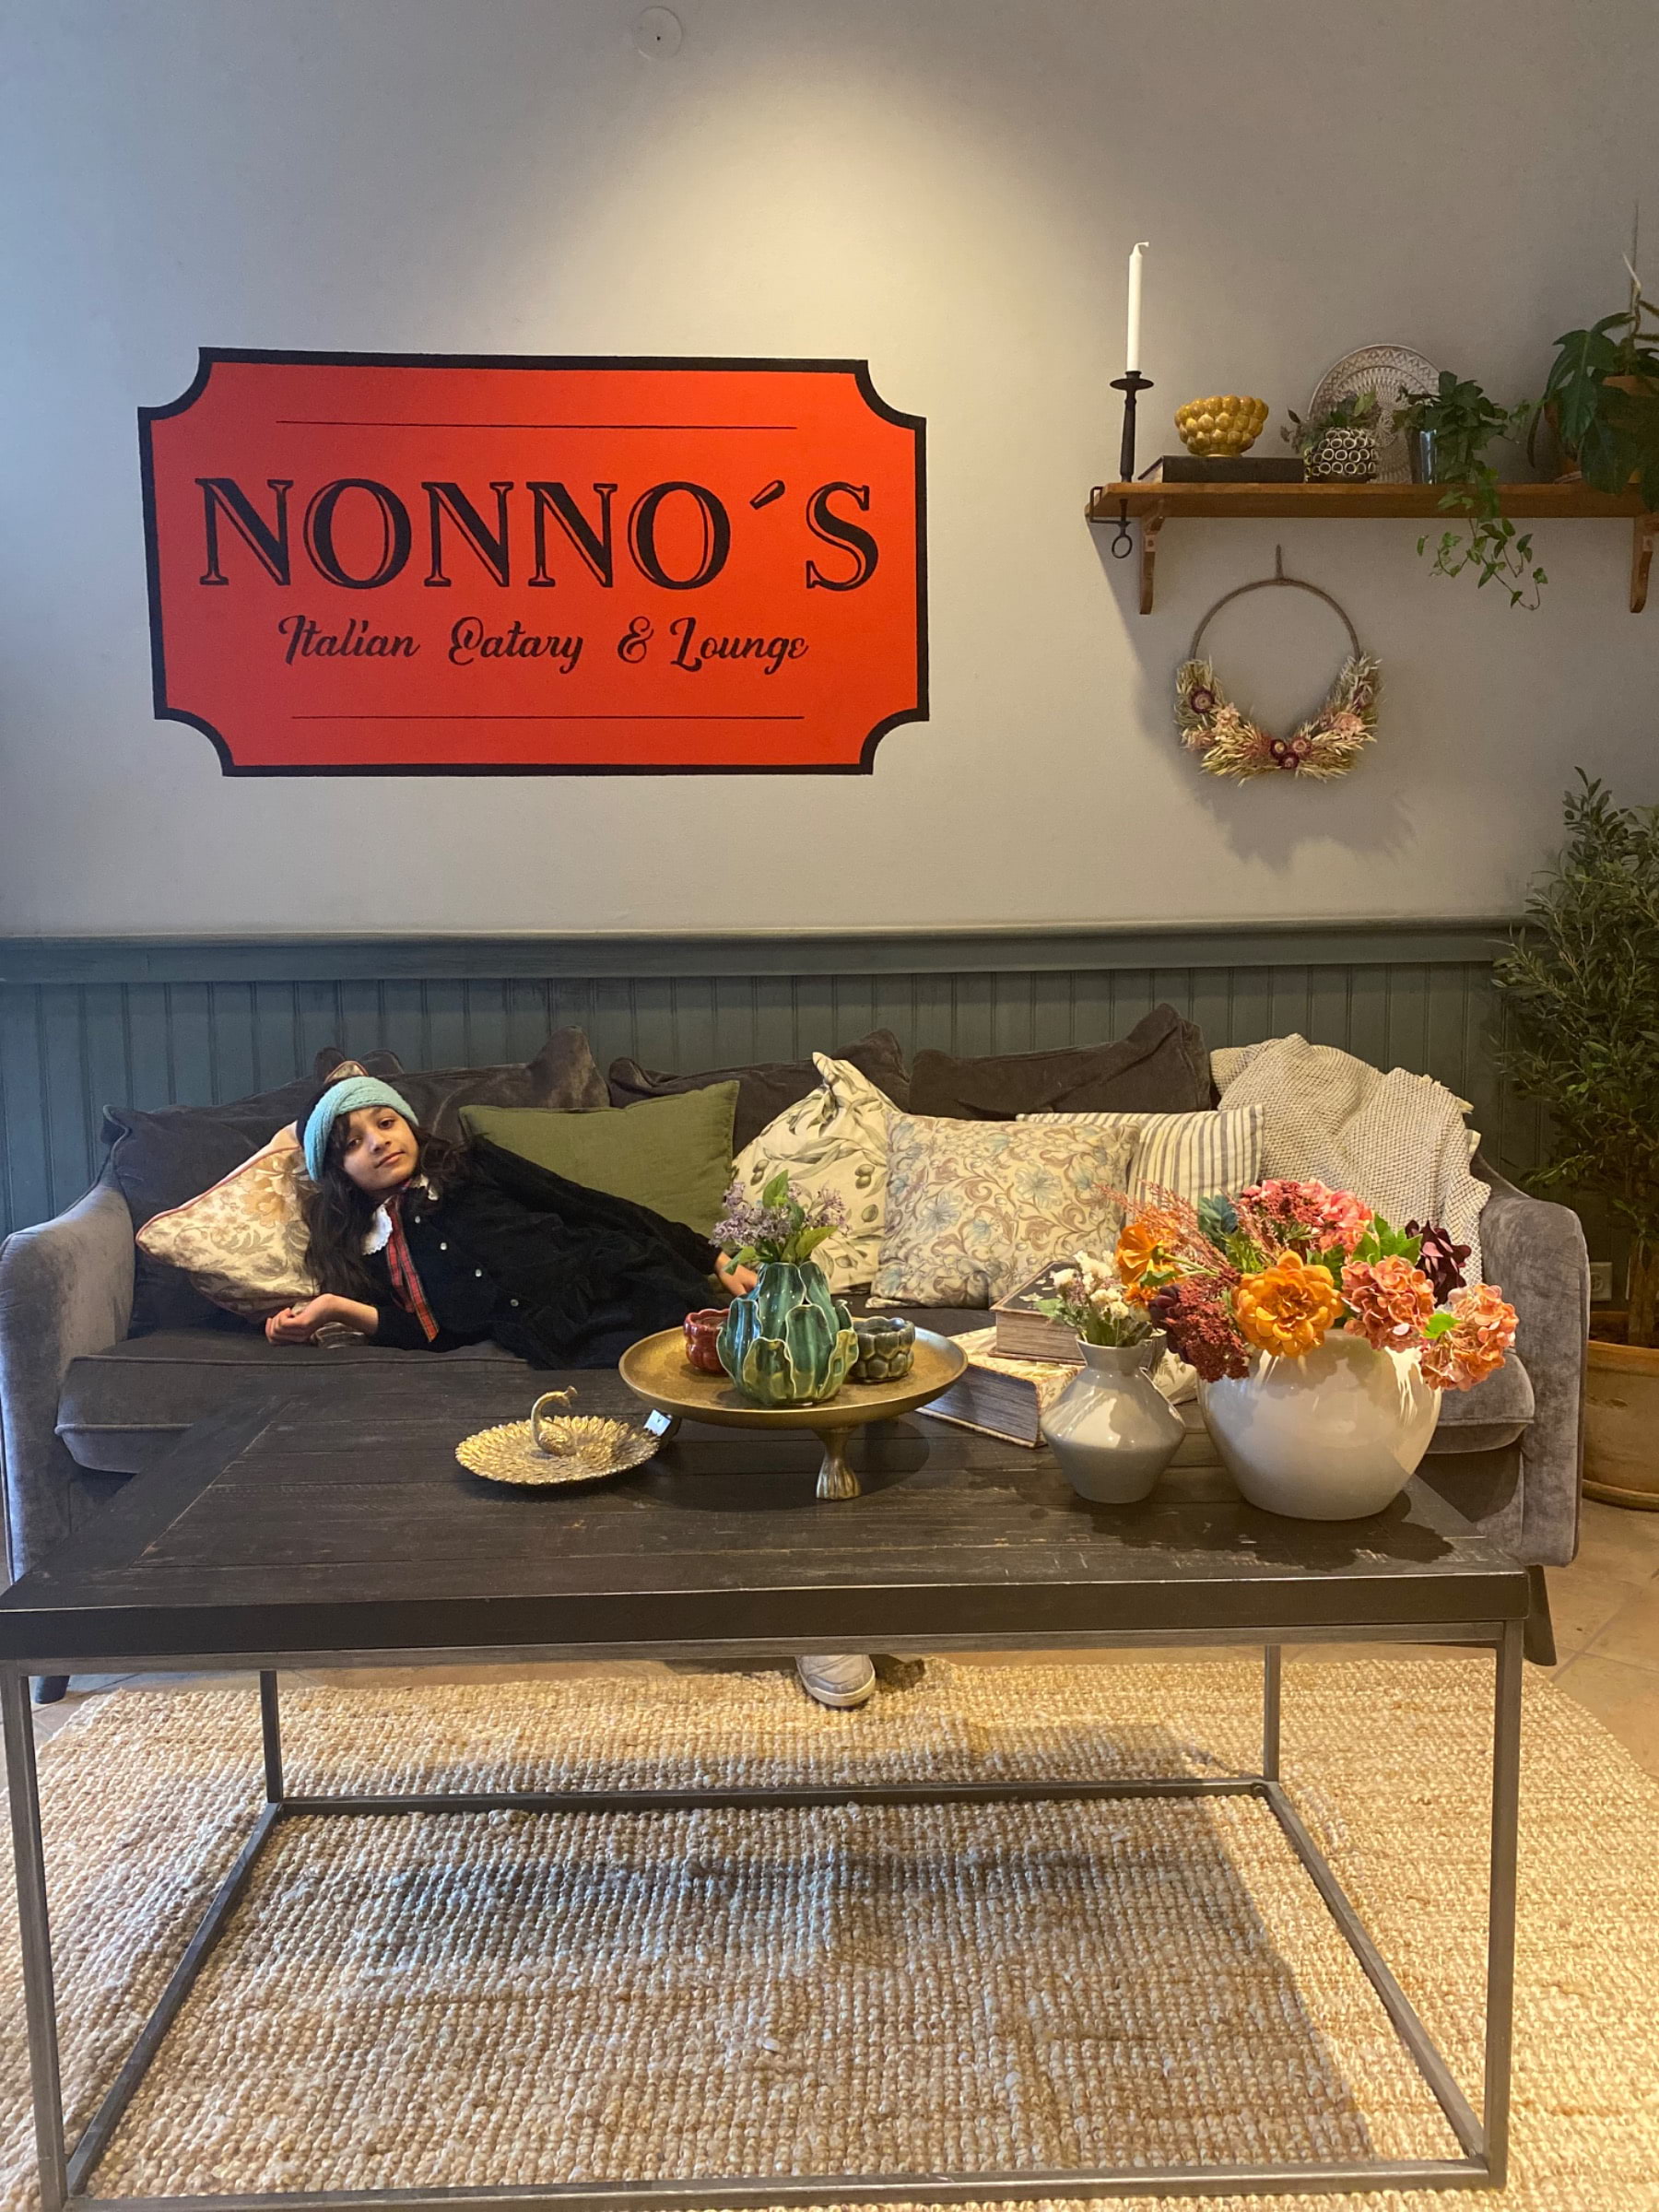 Photo from Nonno's Italian Eatery & Lounge by Madiha S. (20/03/2022)